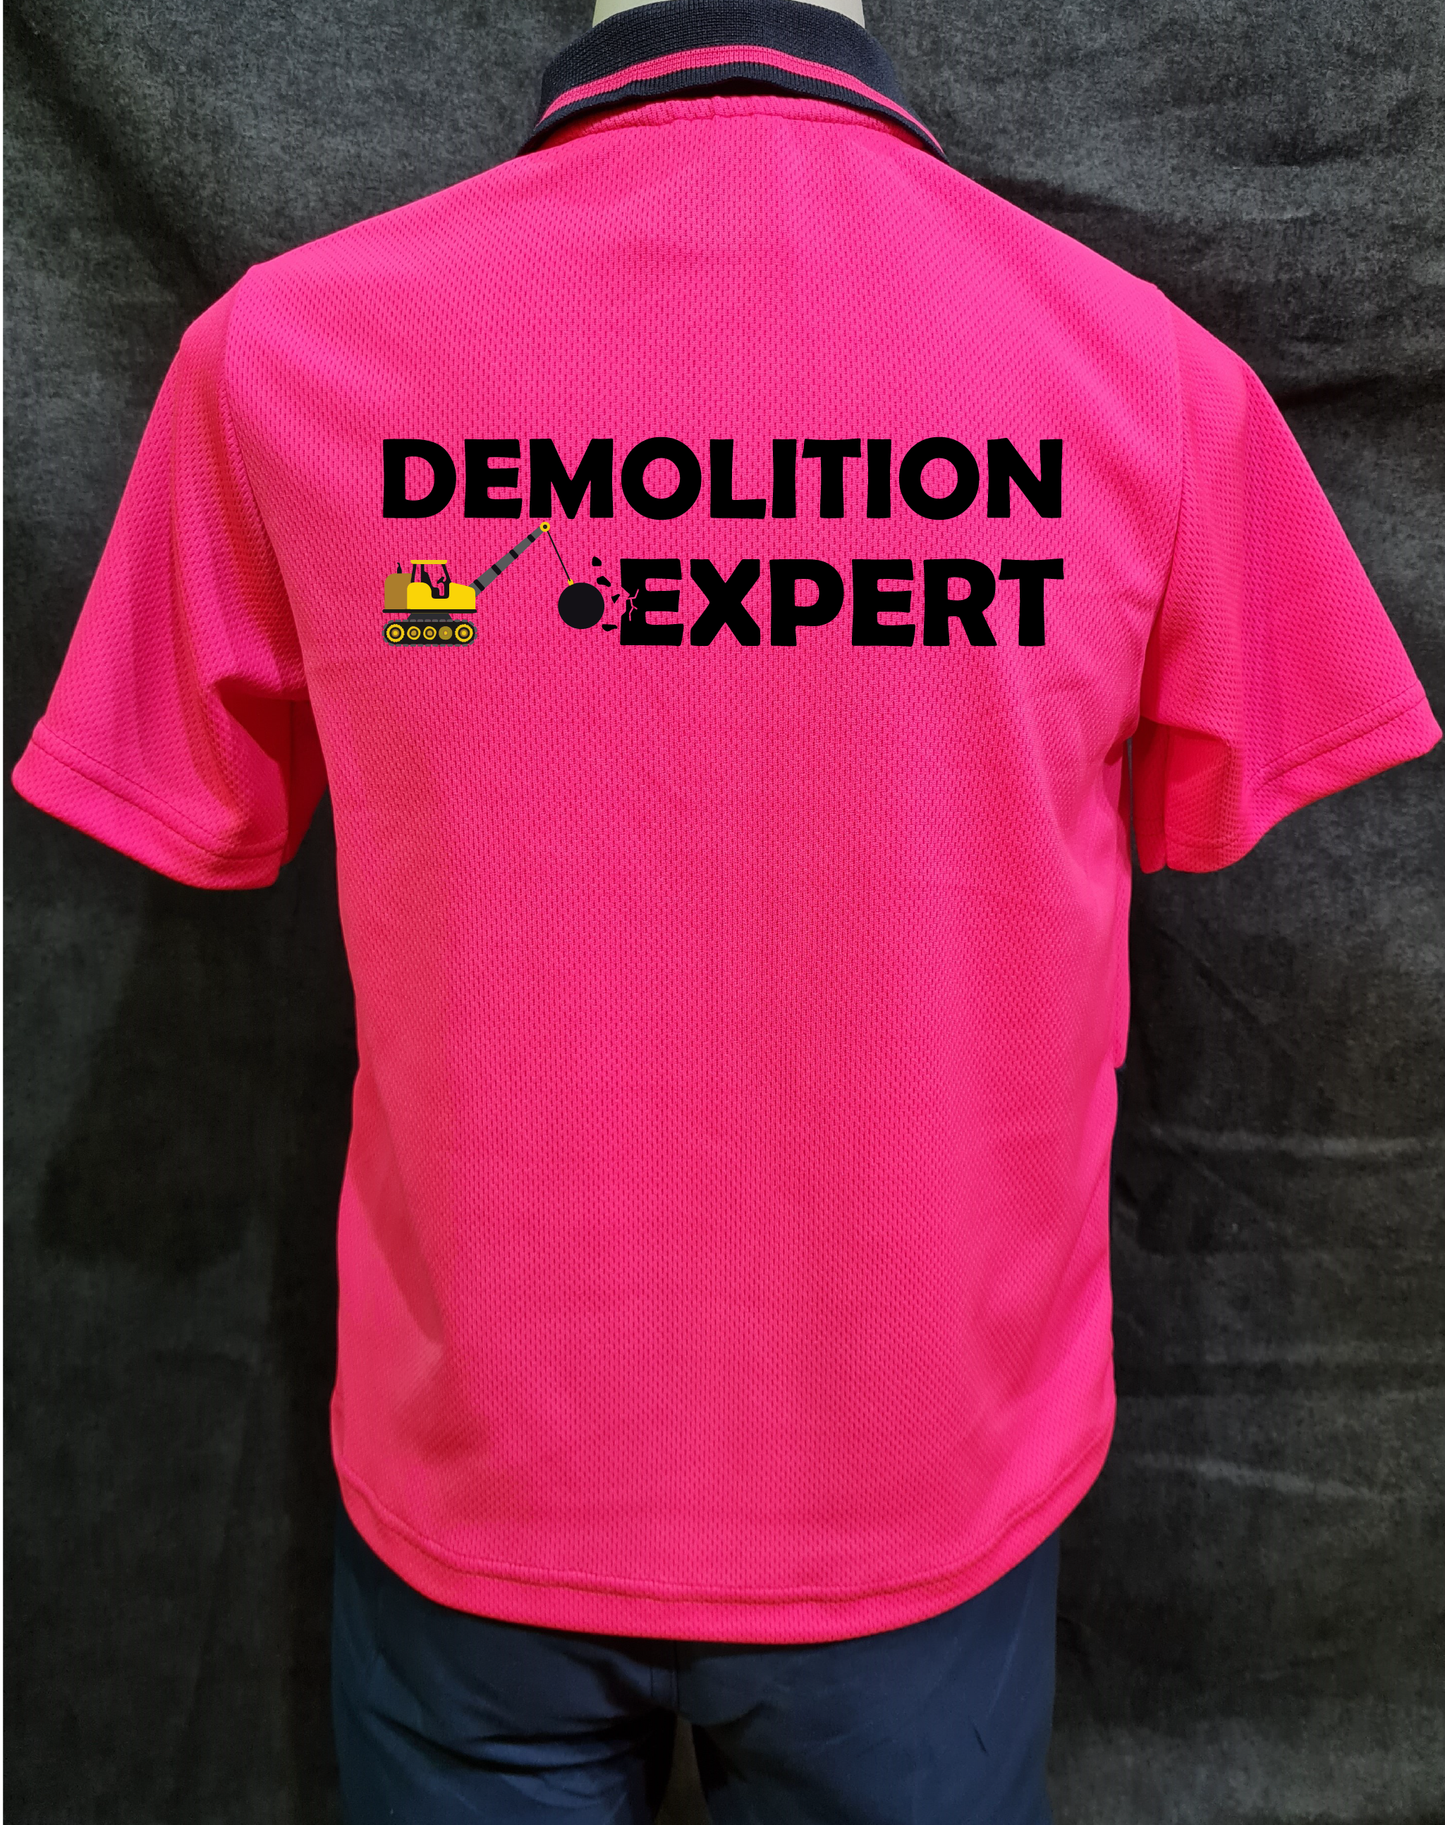 Demolition Expert